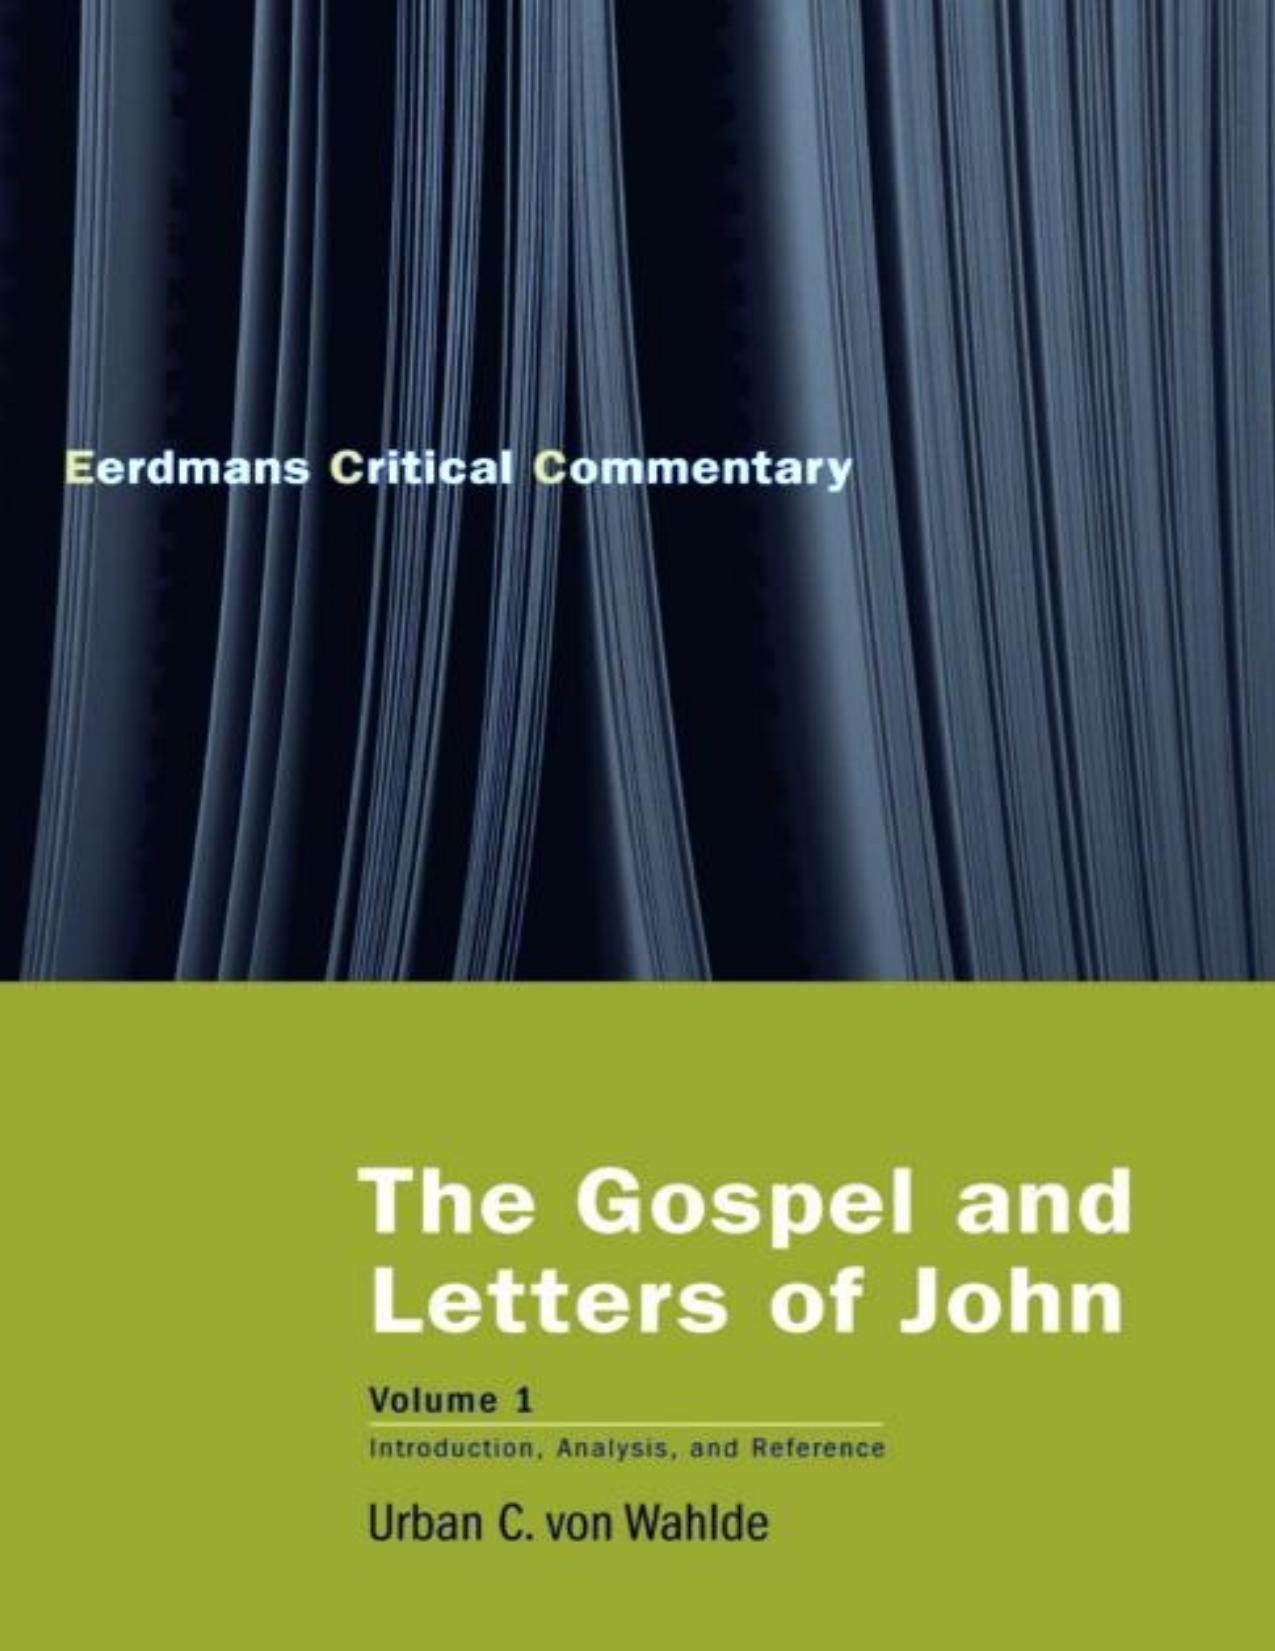 The Gospel and Letters of John, Volume 1